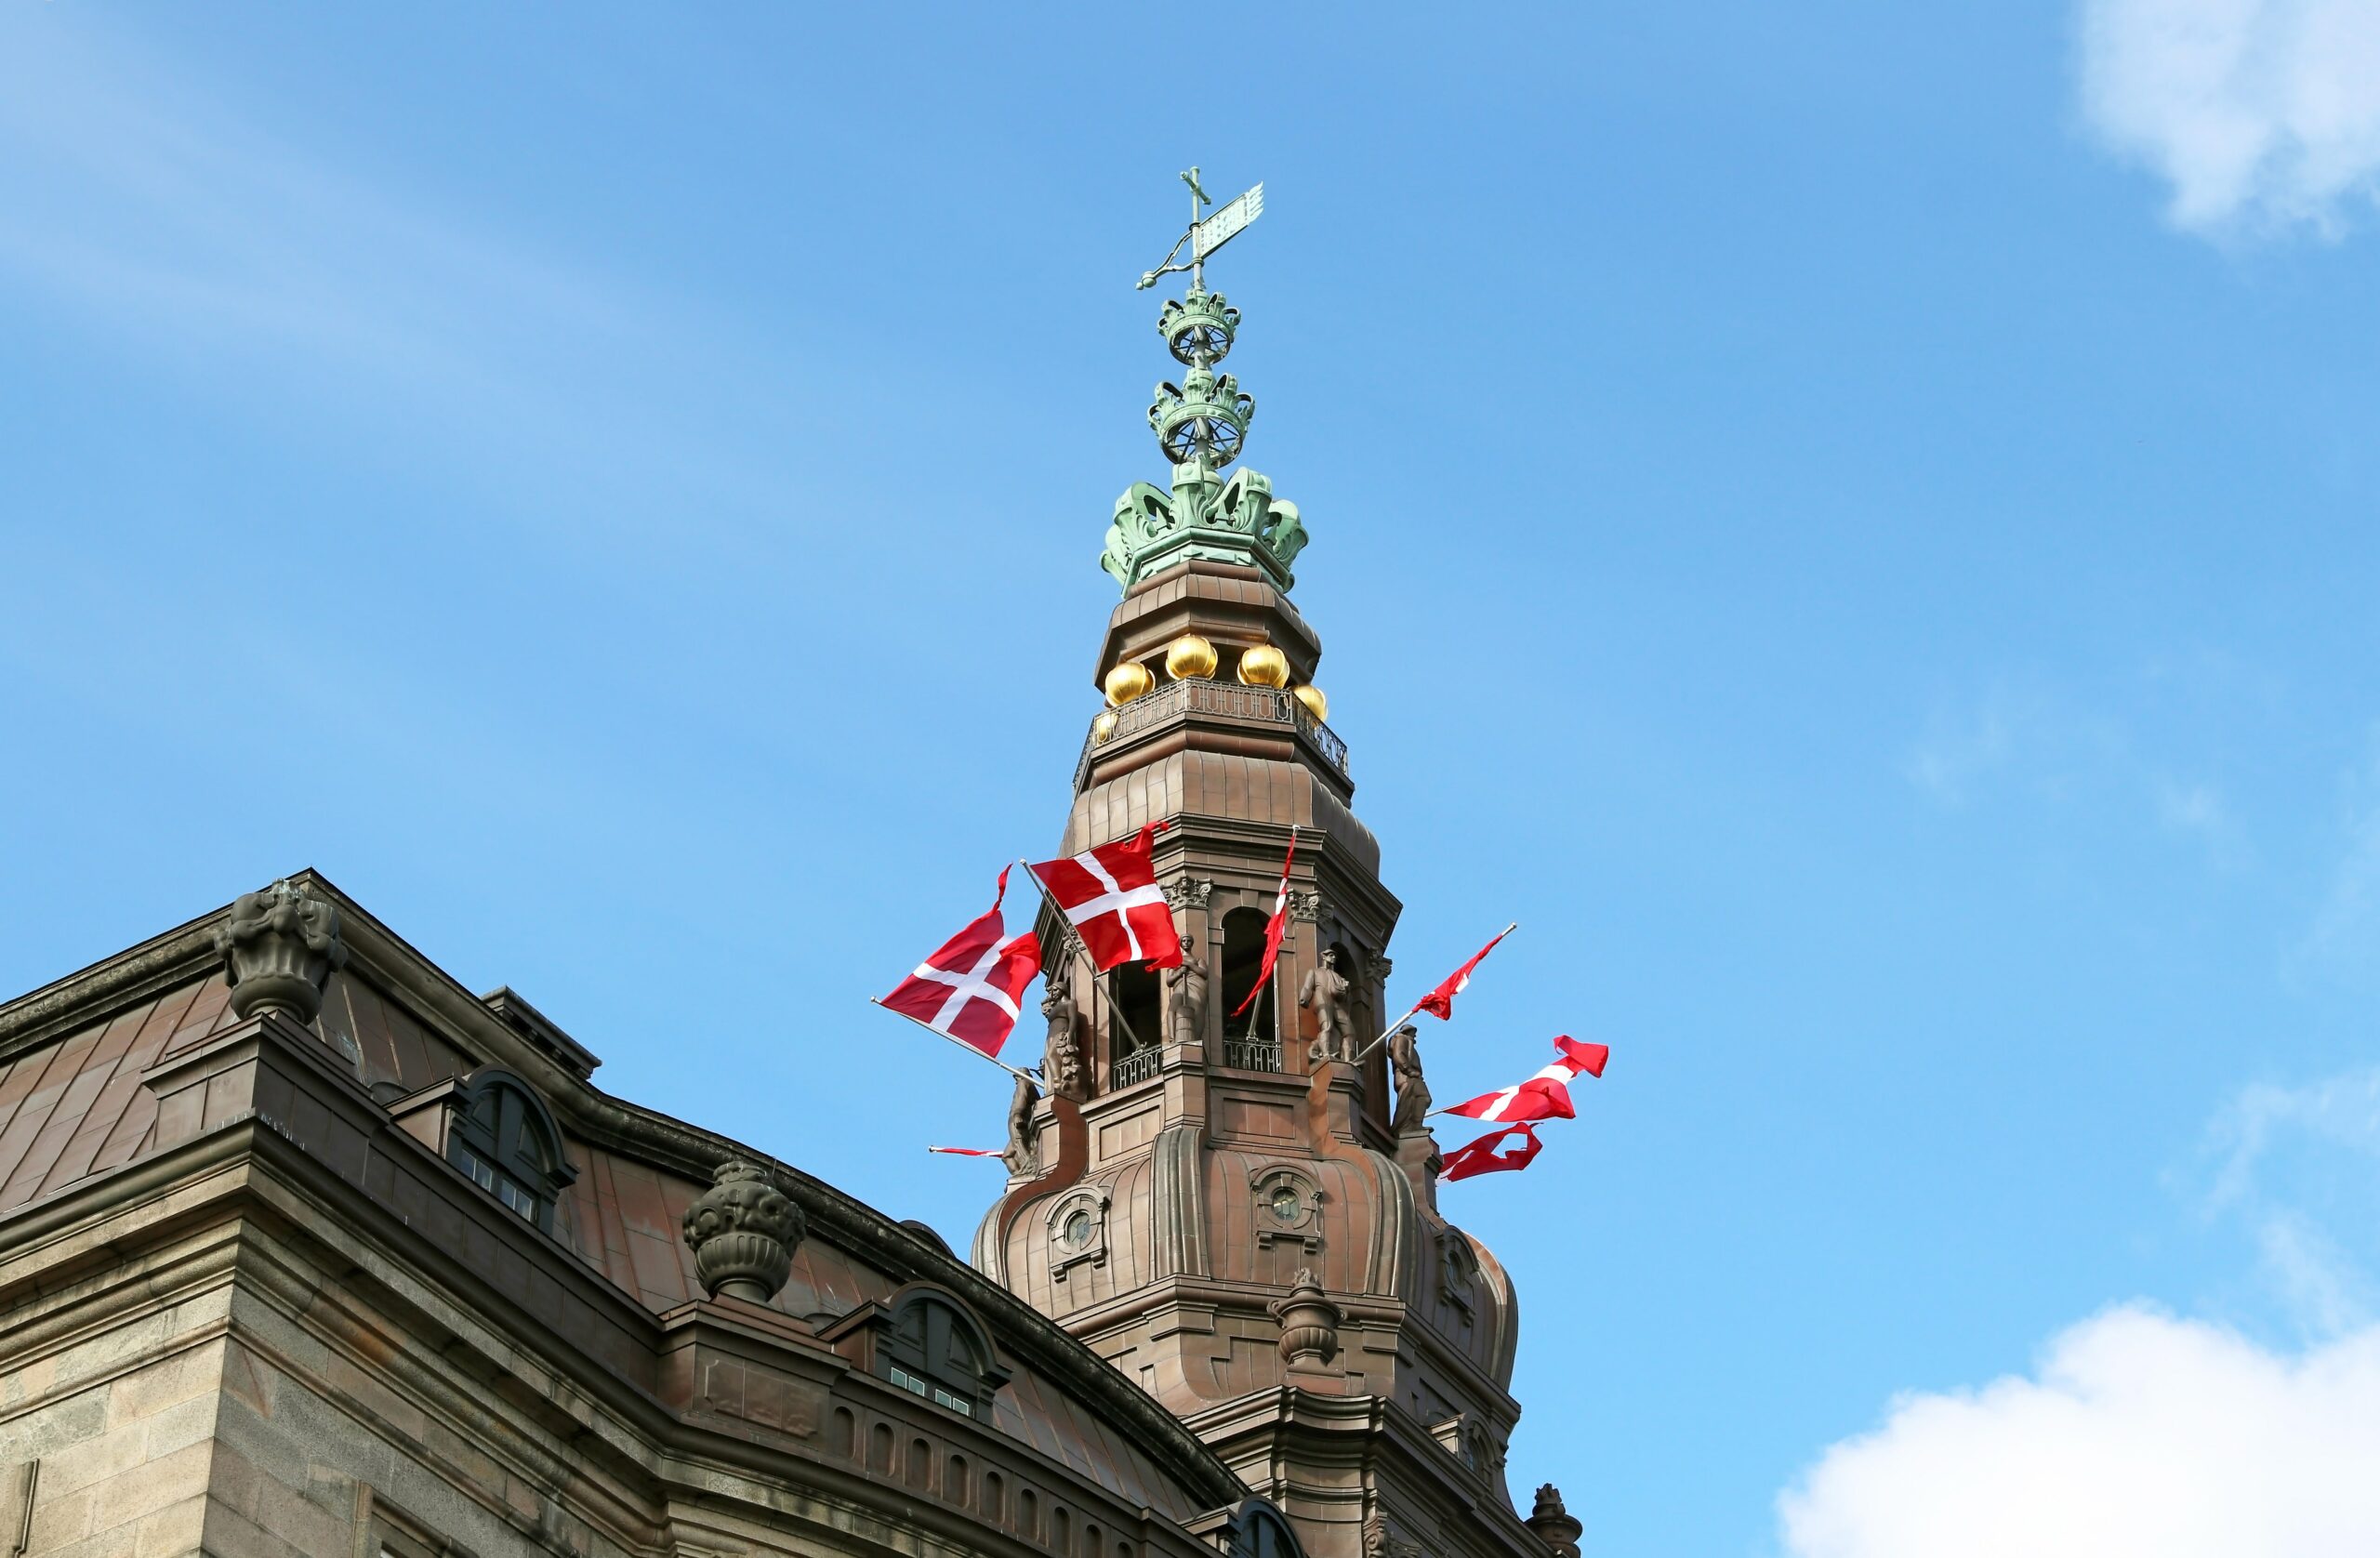 Denmark: Scrap the blasphemy law proposal